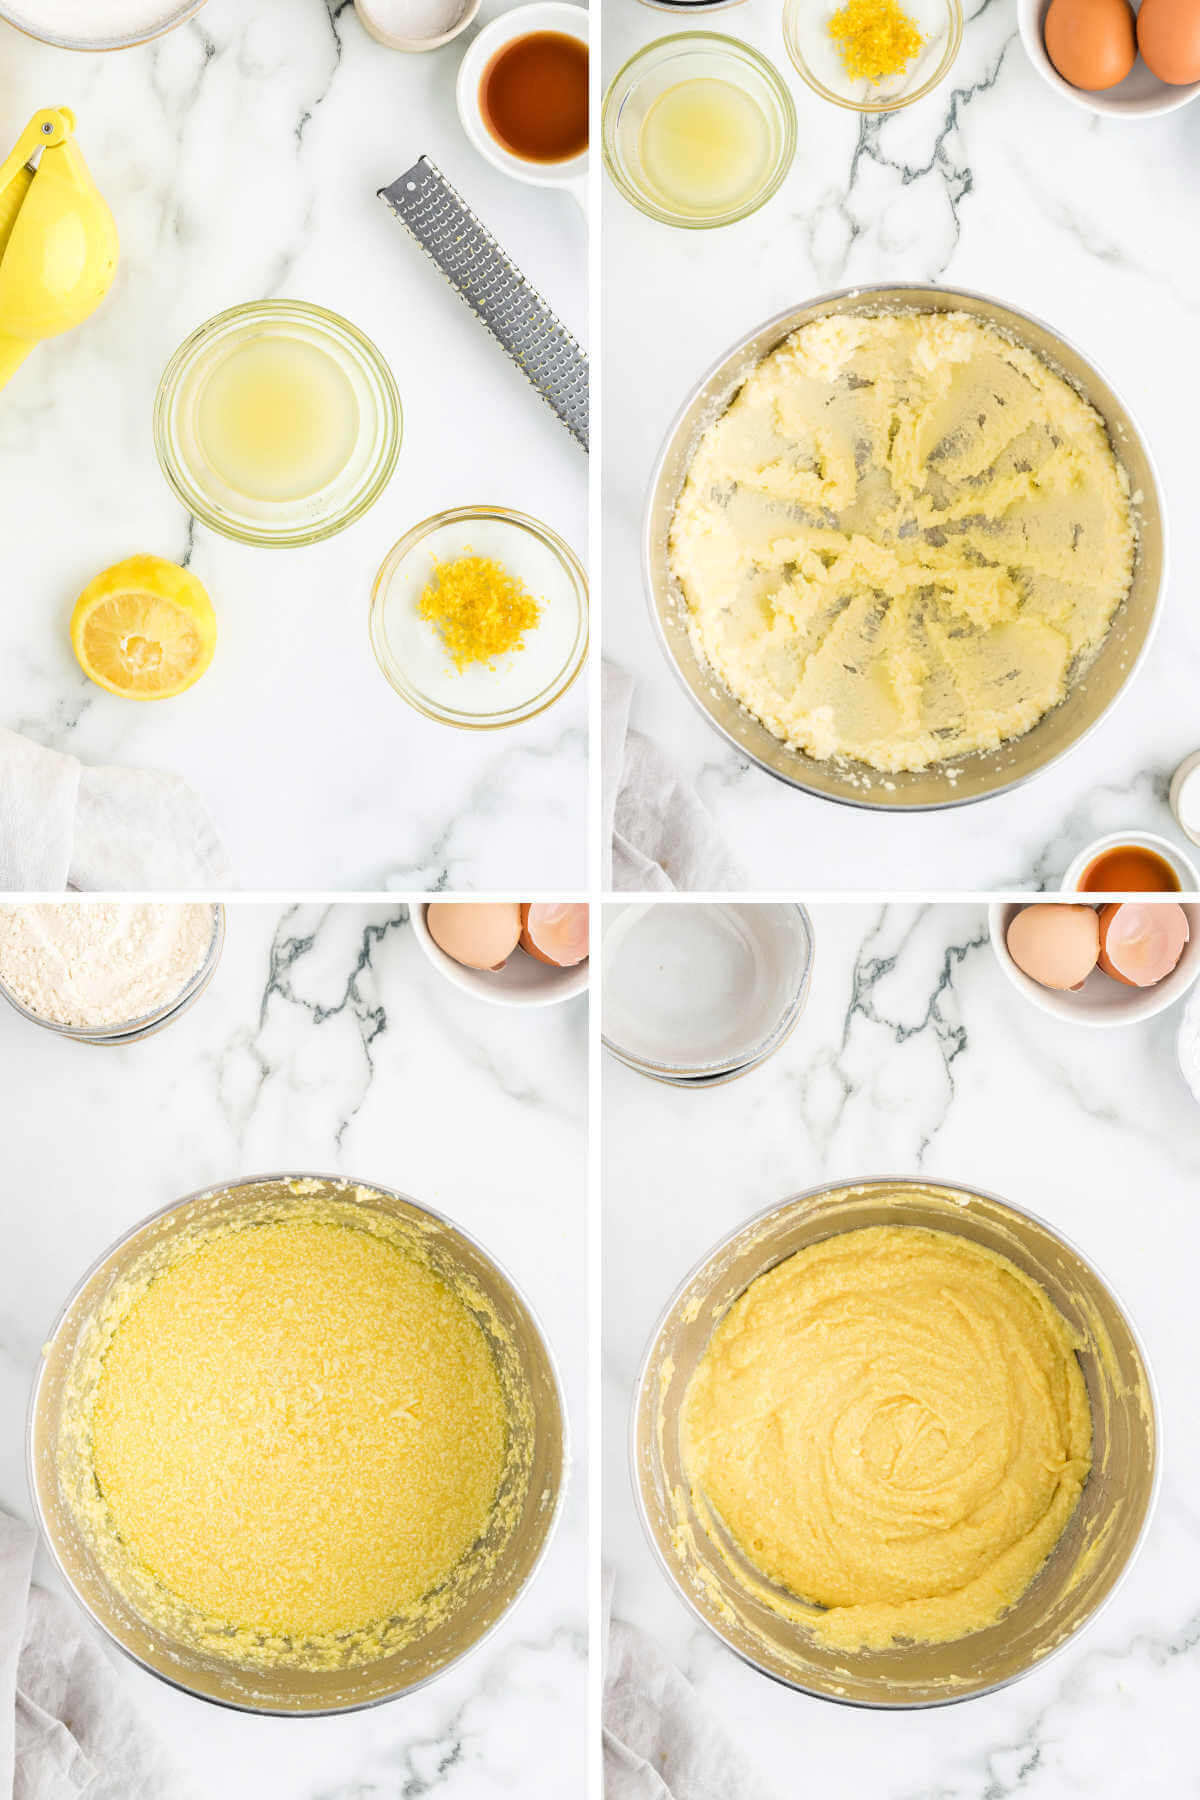 process steps for mixing the batter for lemon ricotta cake prior to baking.